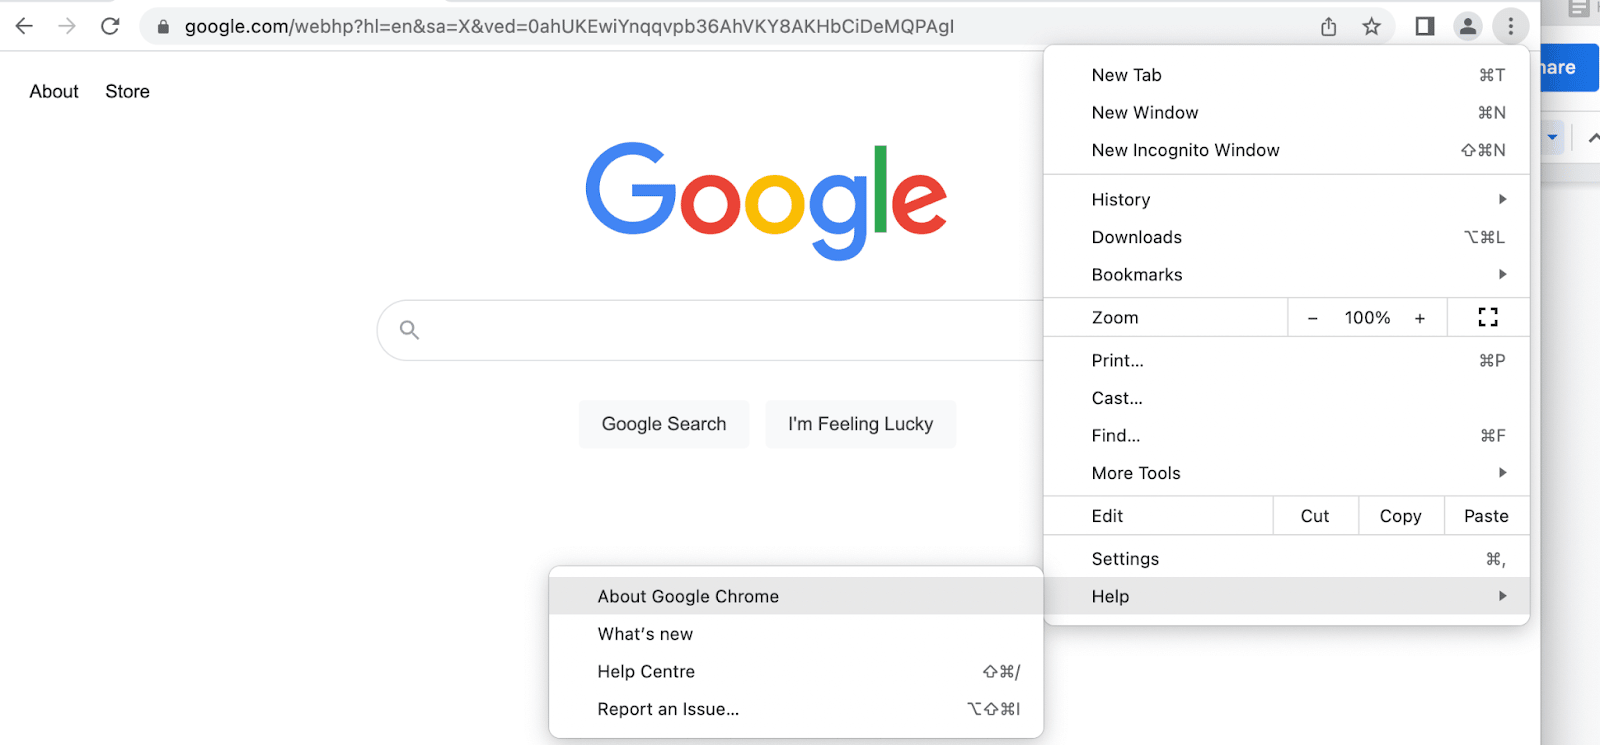 Checking whether Google Chrome needs updating